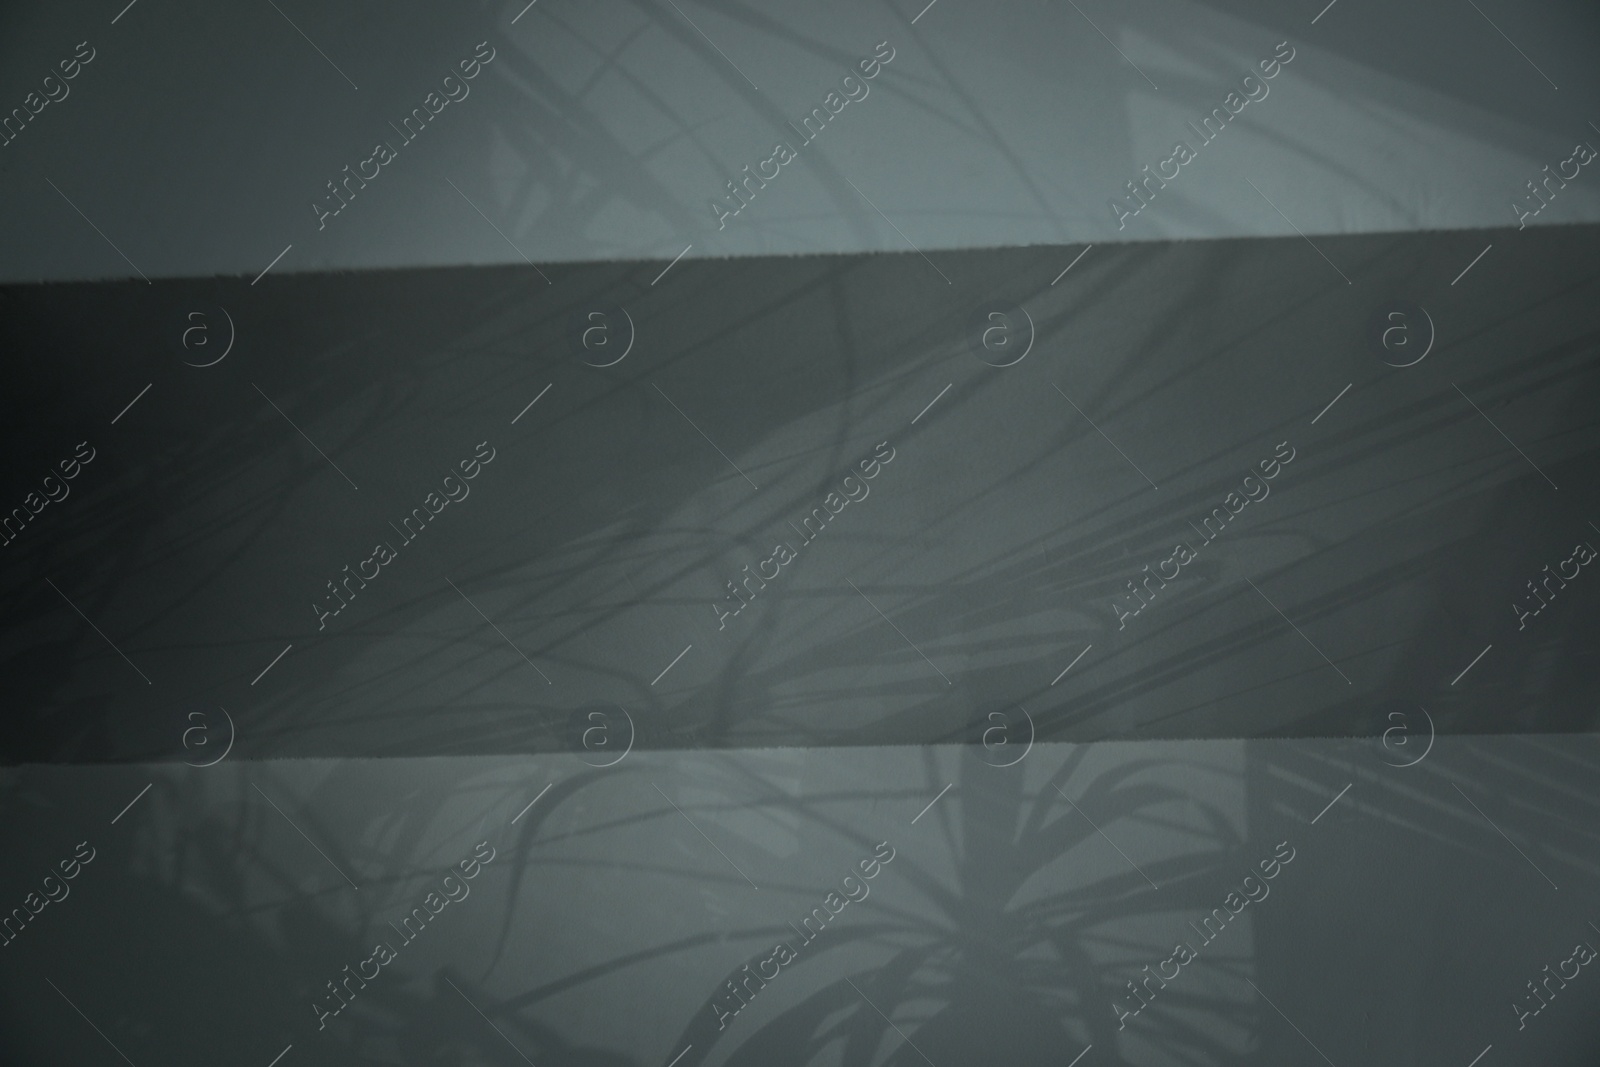 Photo of Shadow from window and houseplants on dark grey wall indoors